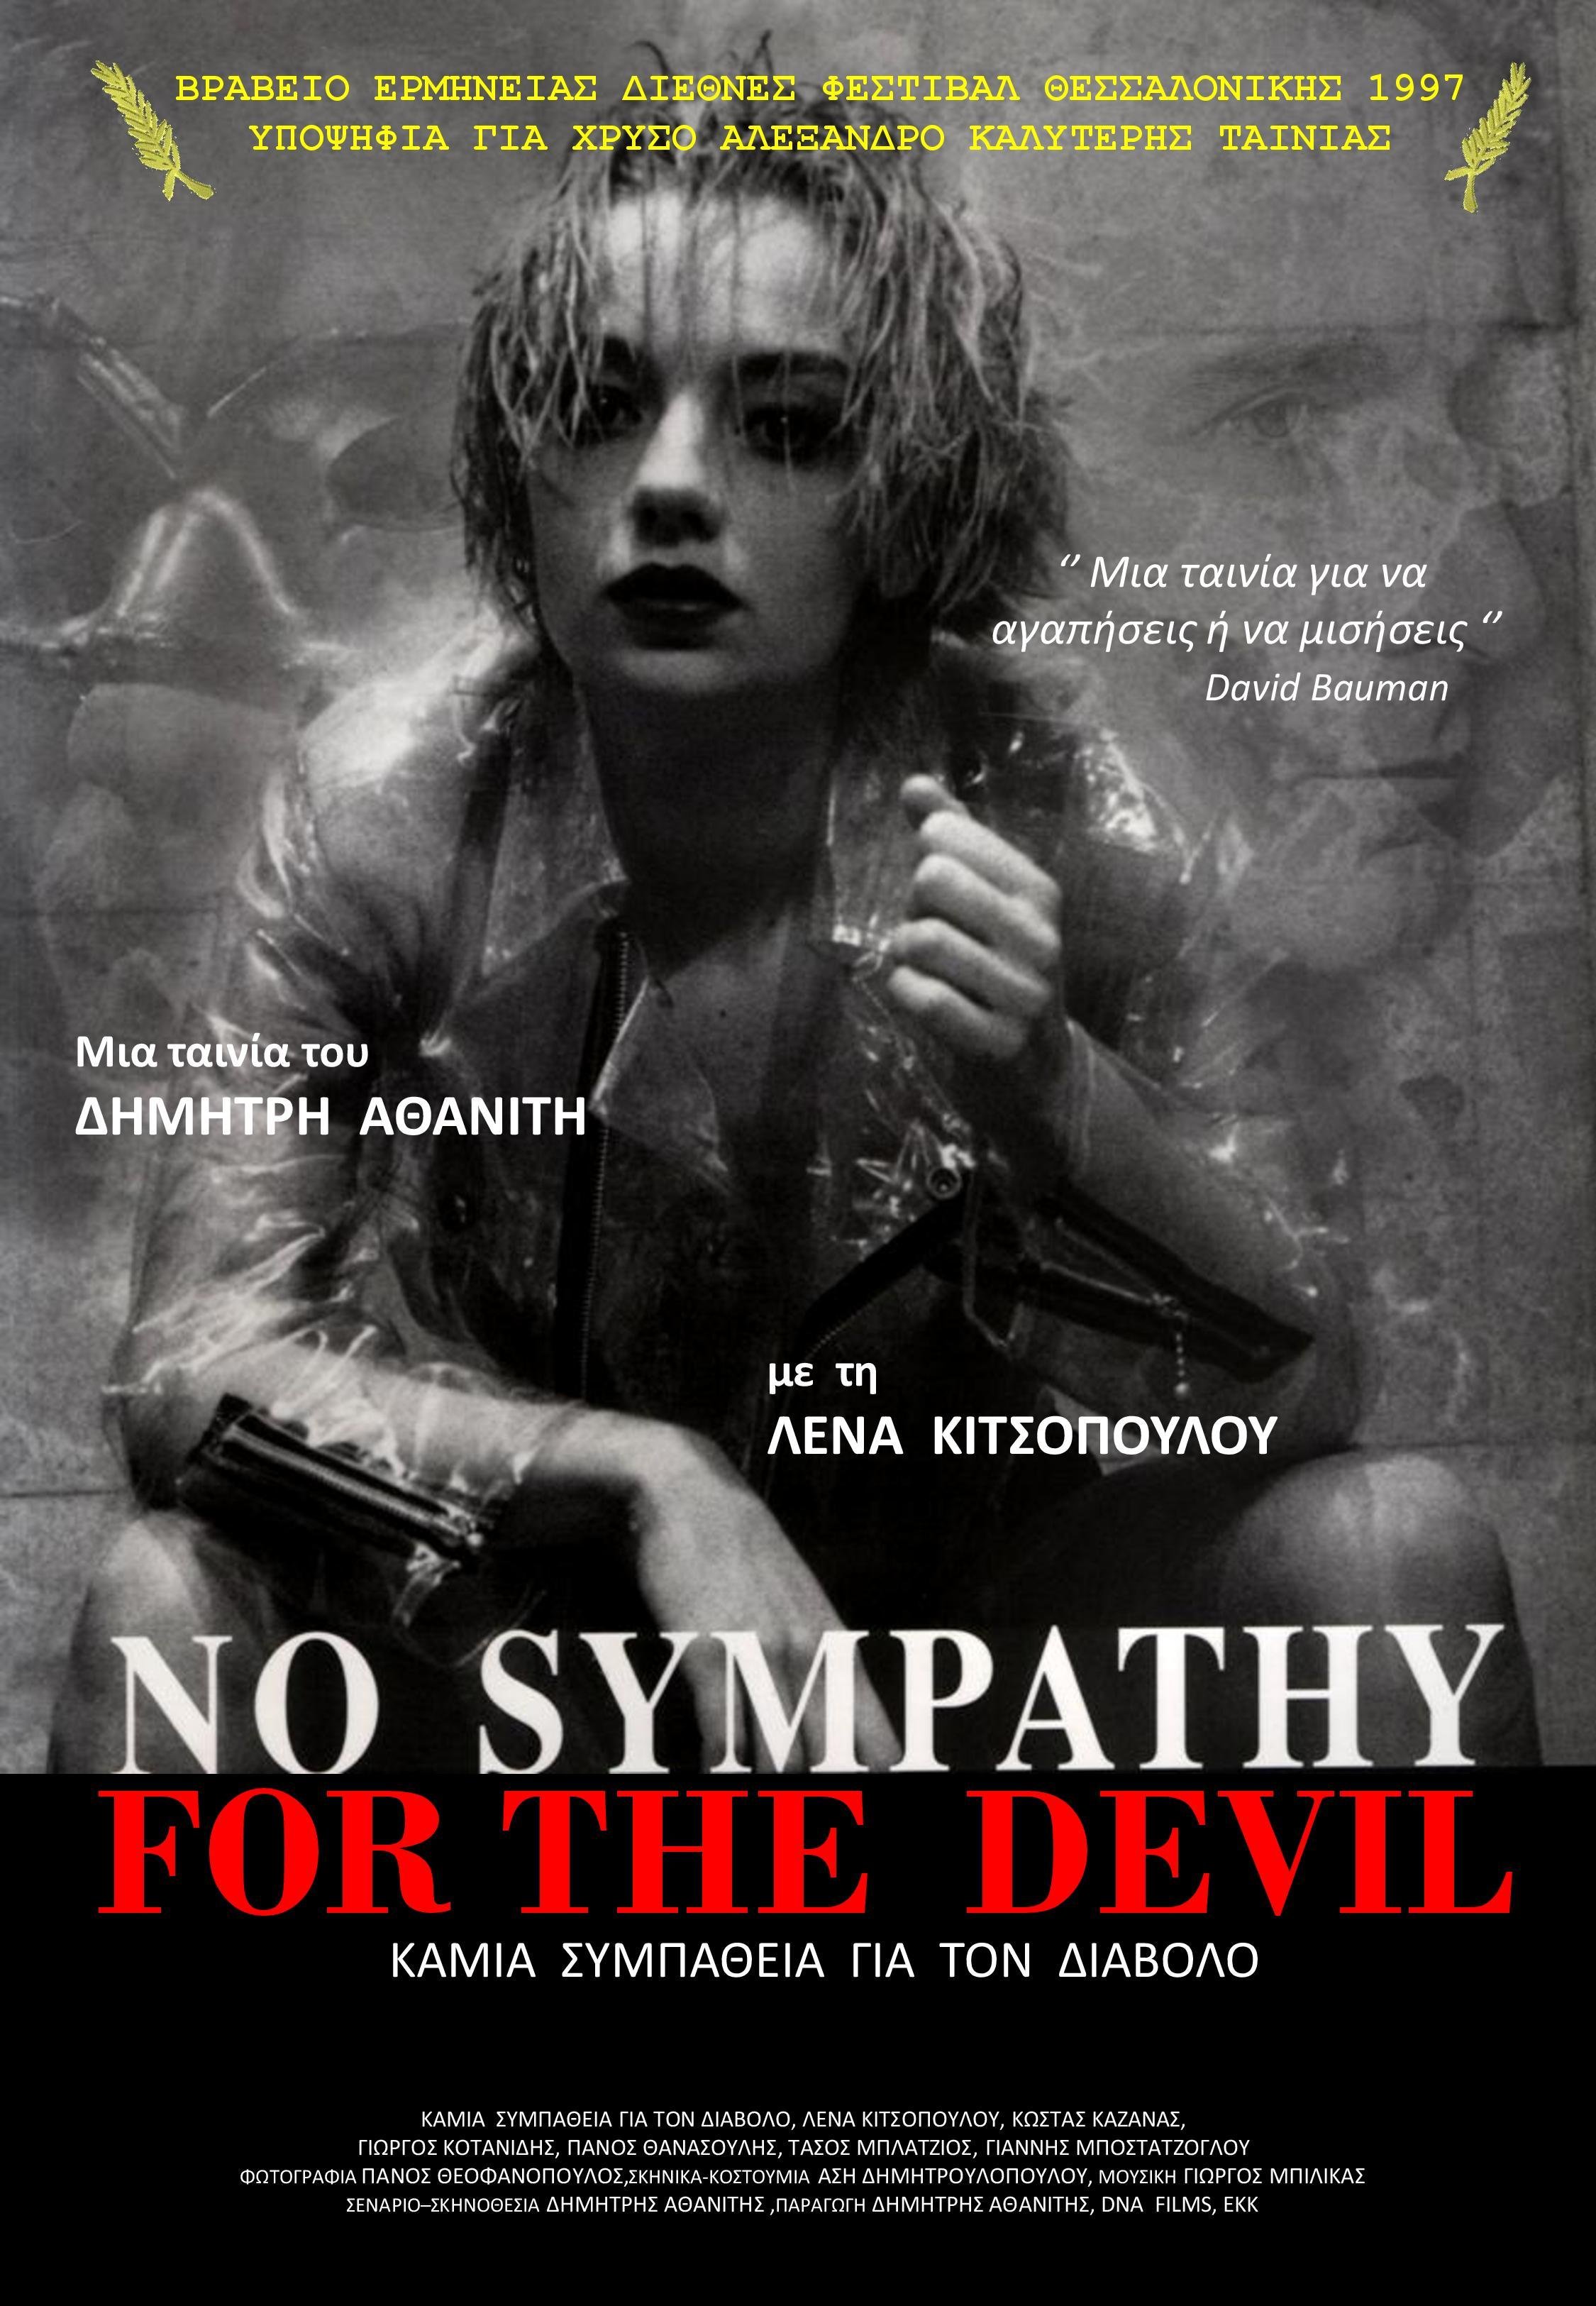 No Sympathy for the Devil (1997) Screenshot 1